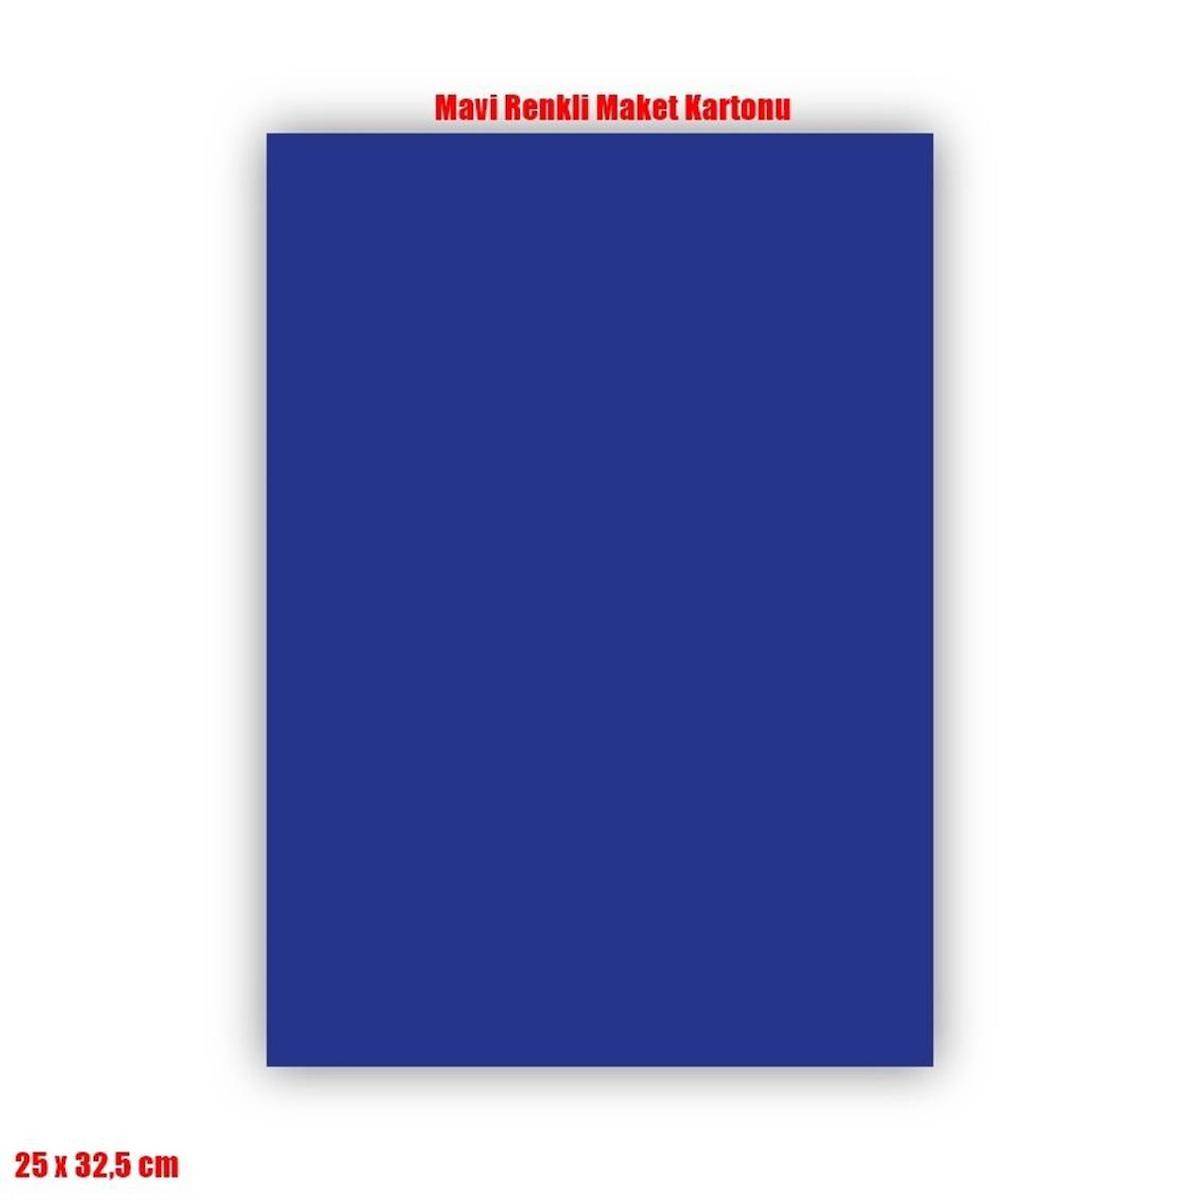 Pazarama Fedo 041 Maket Kartonu-590 gram/m2-Mavi-25x32.5 cm.